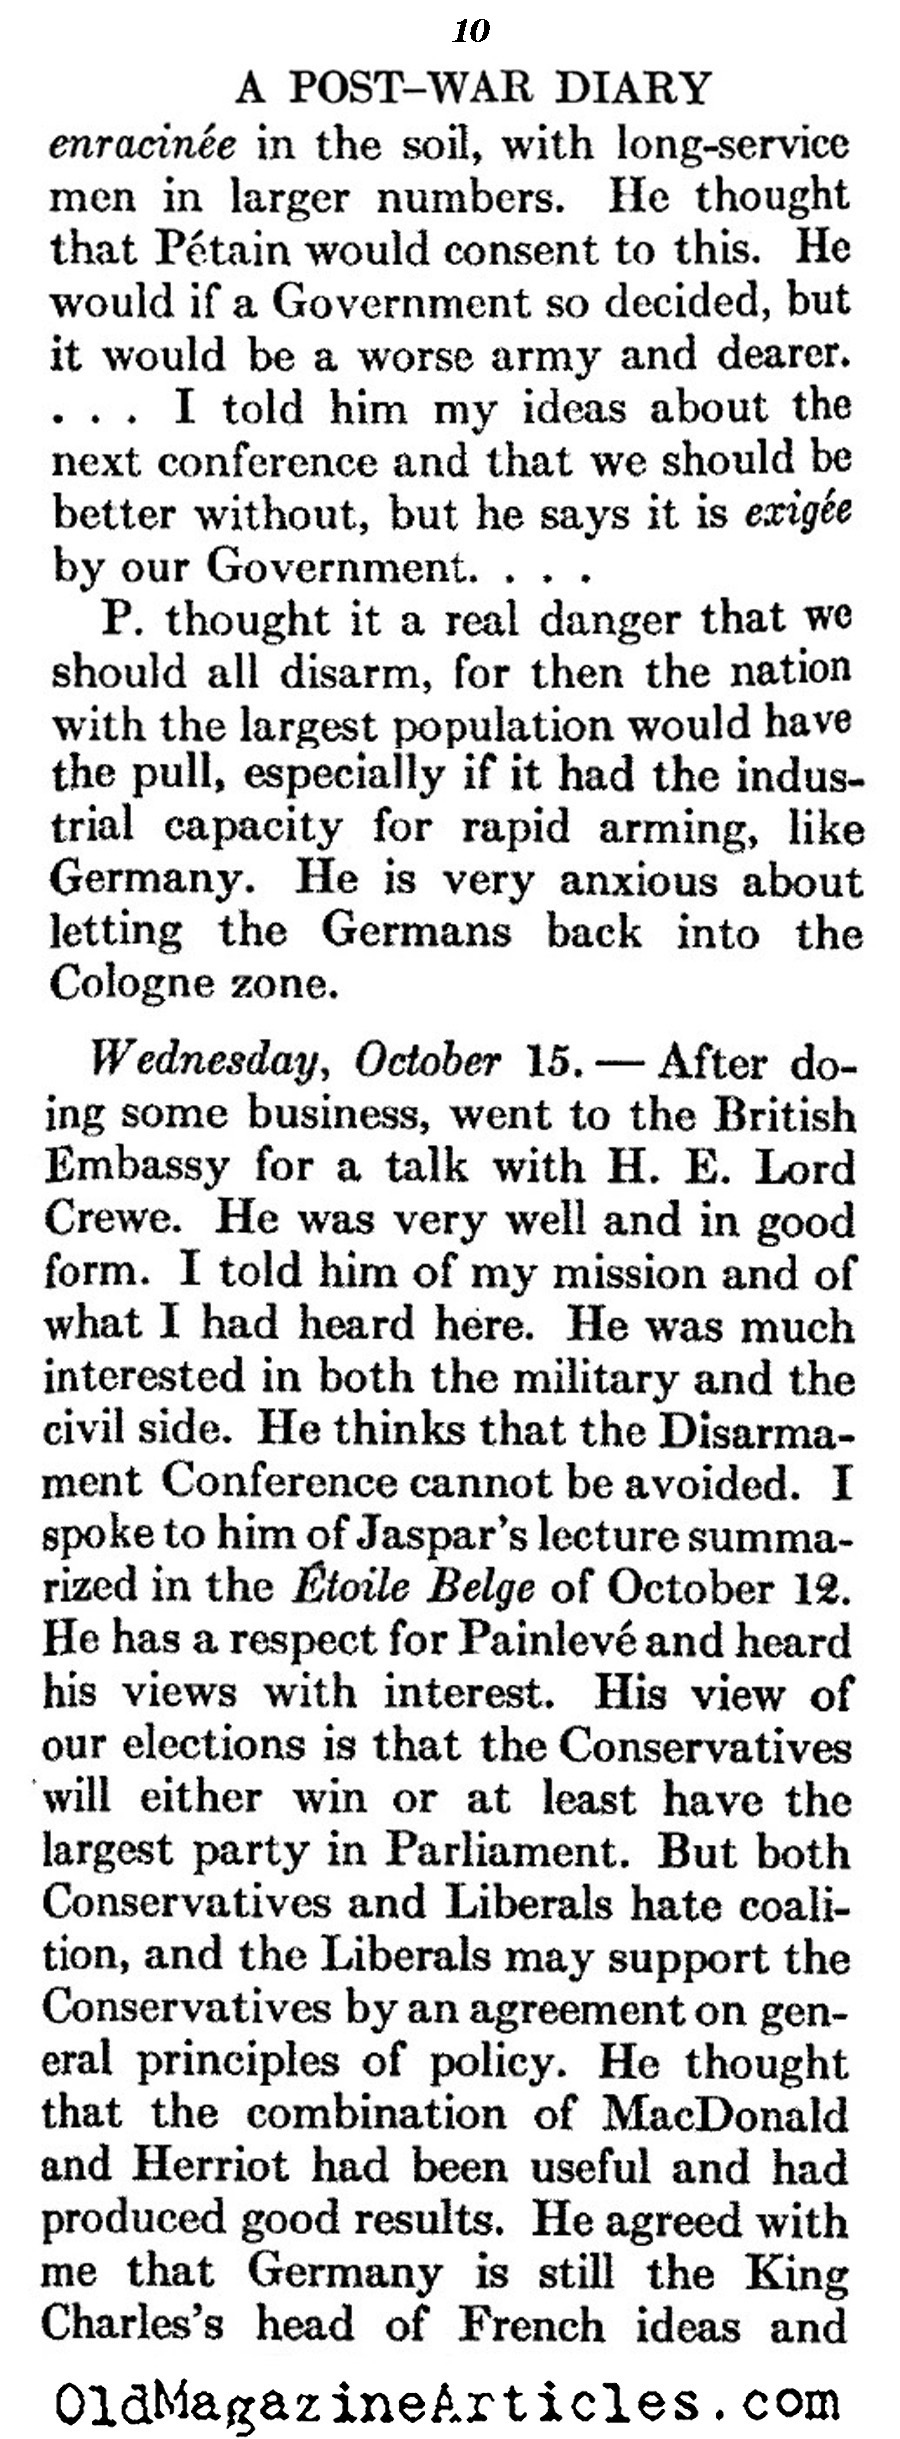 Post-War Diary (Atlantic Monthly, 1928)